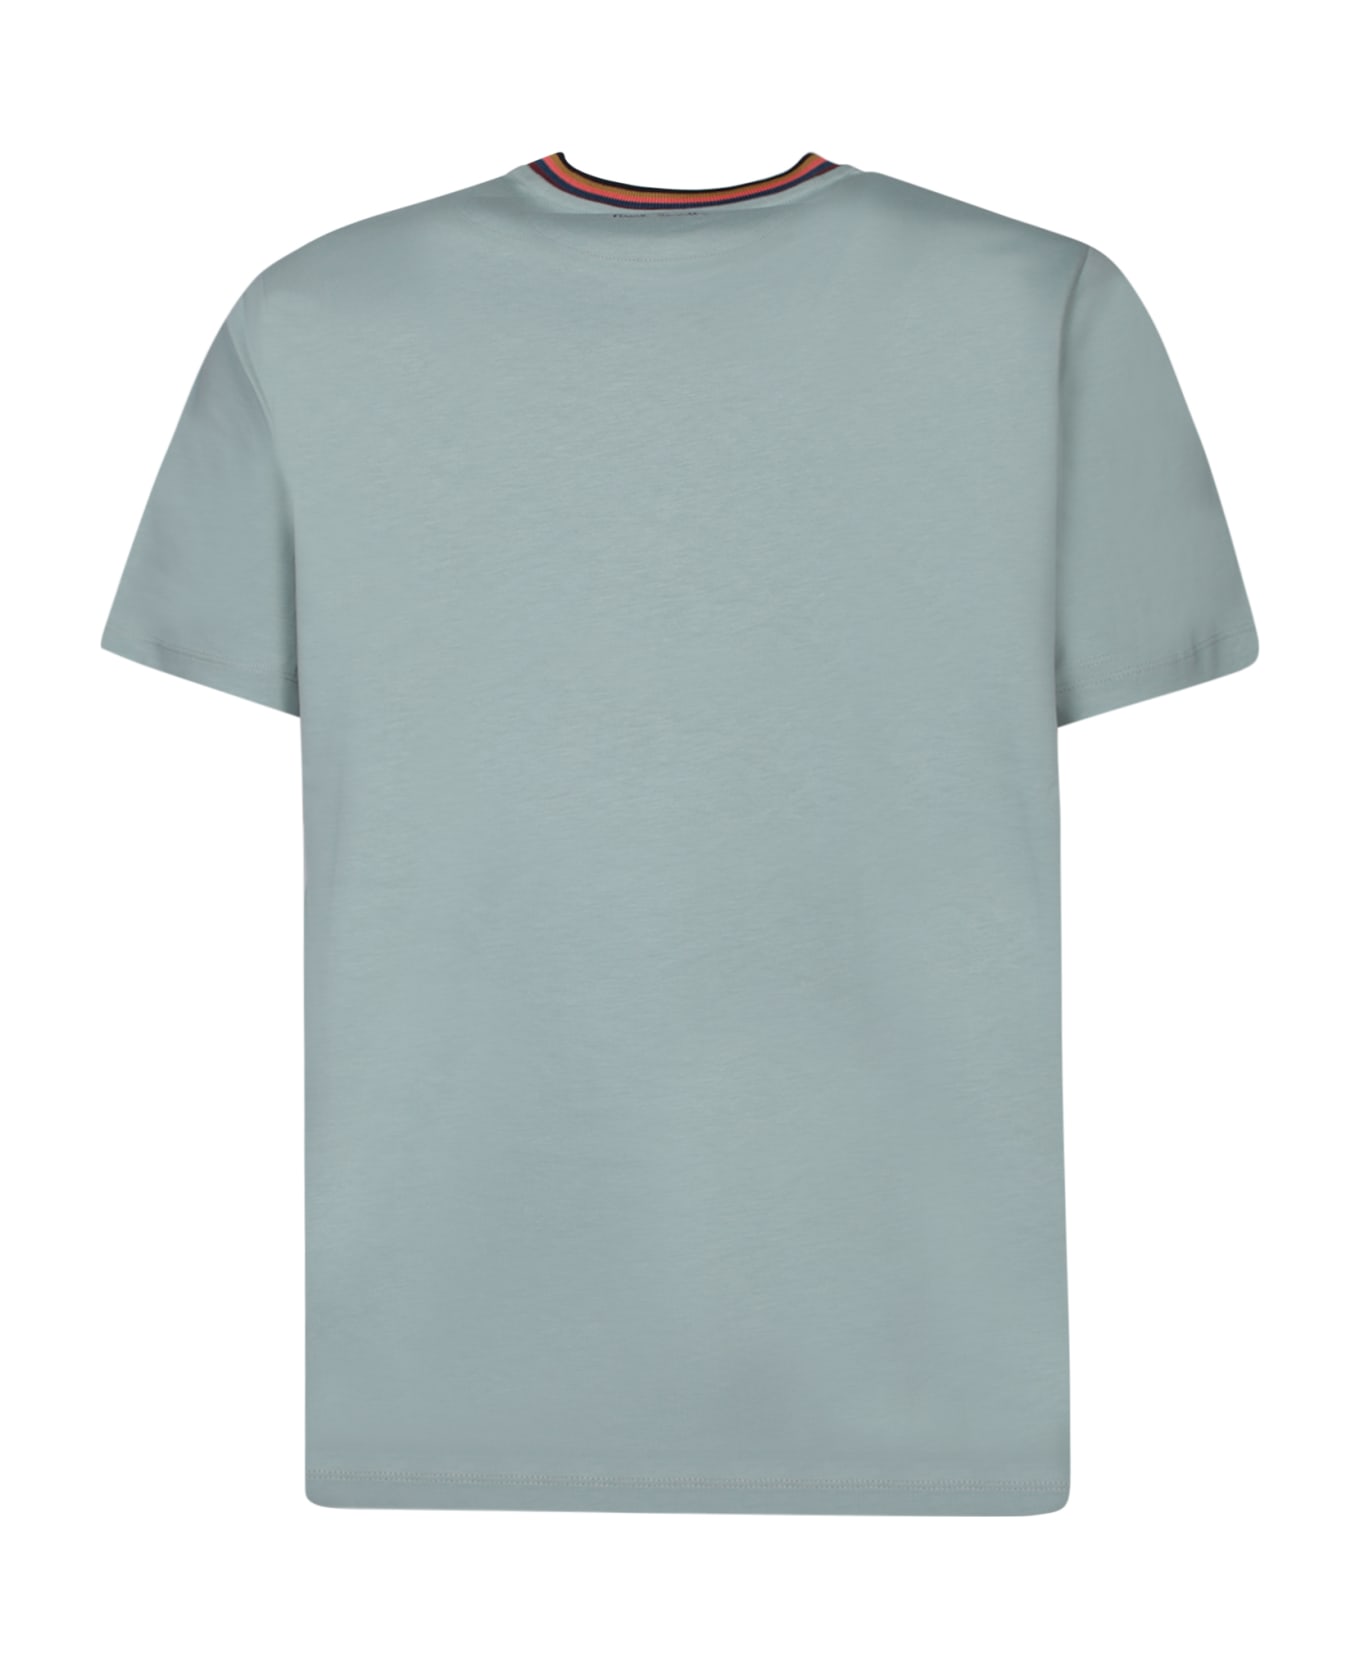 Paul Smith Short Sleeves Mint Green T-shirt - Green